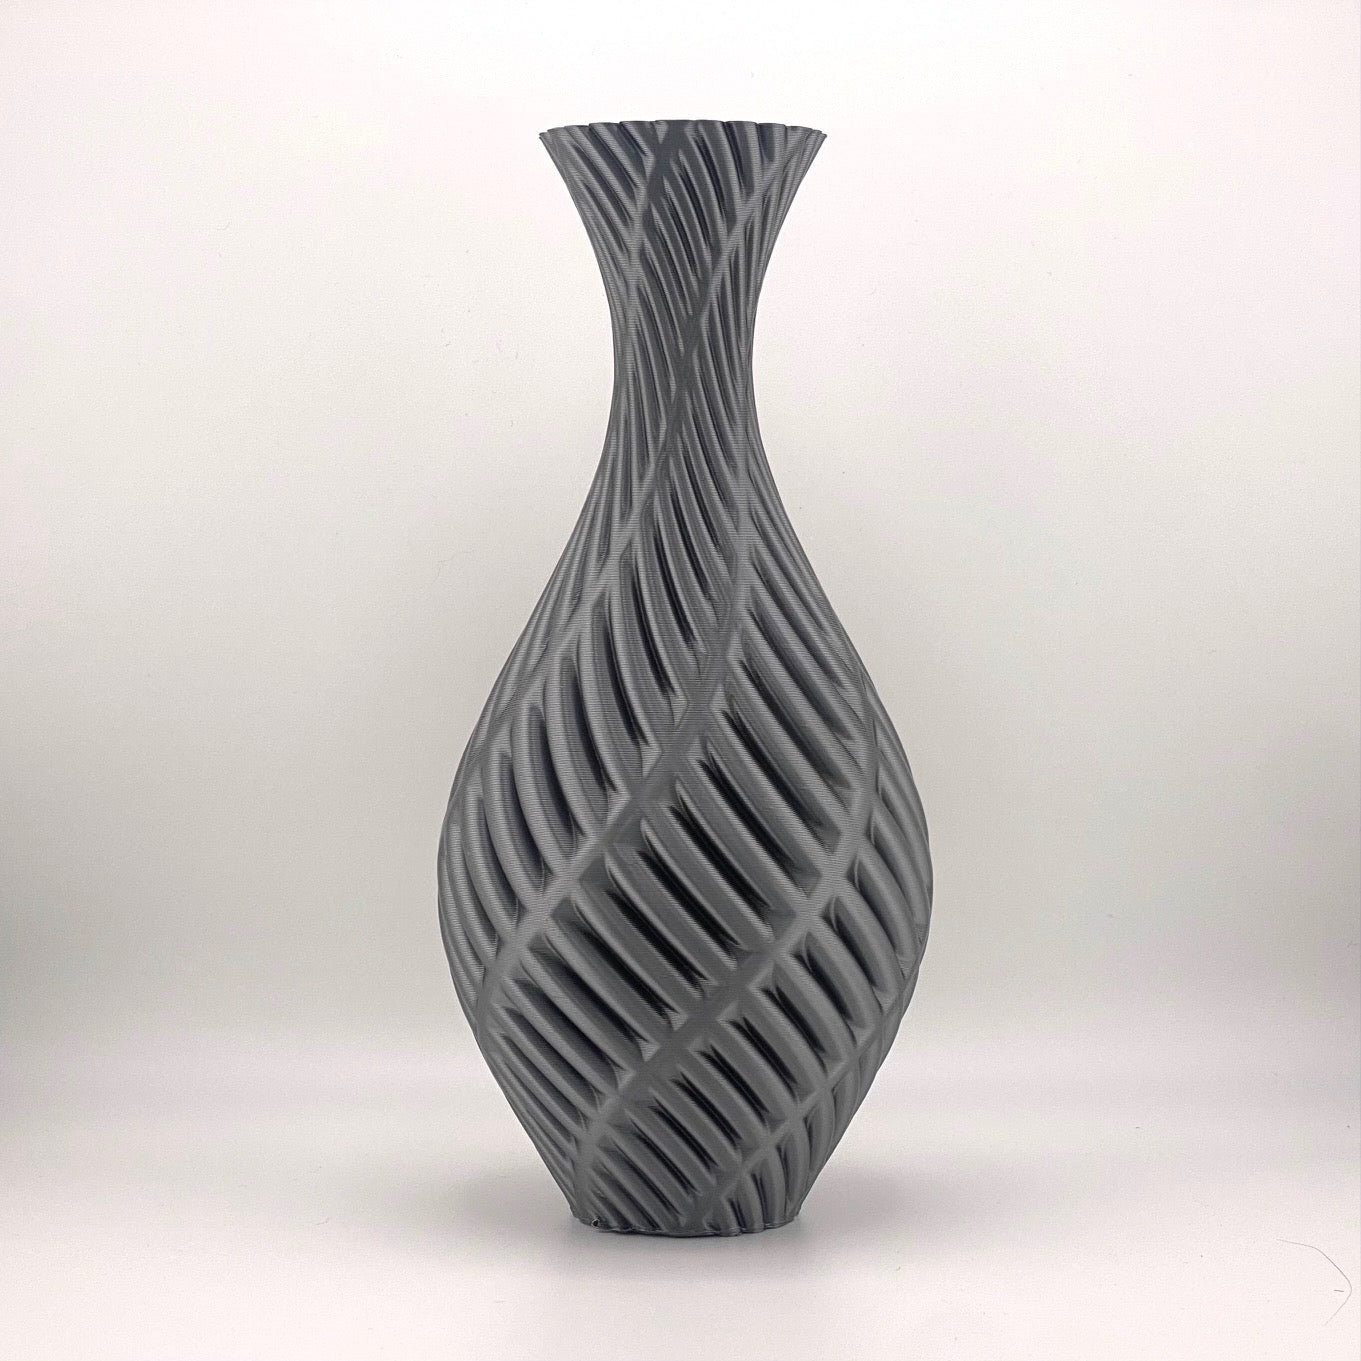 Fern 3D printed in Industrial Grey glossy filament